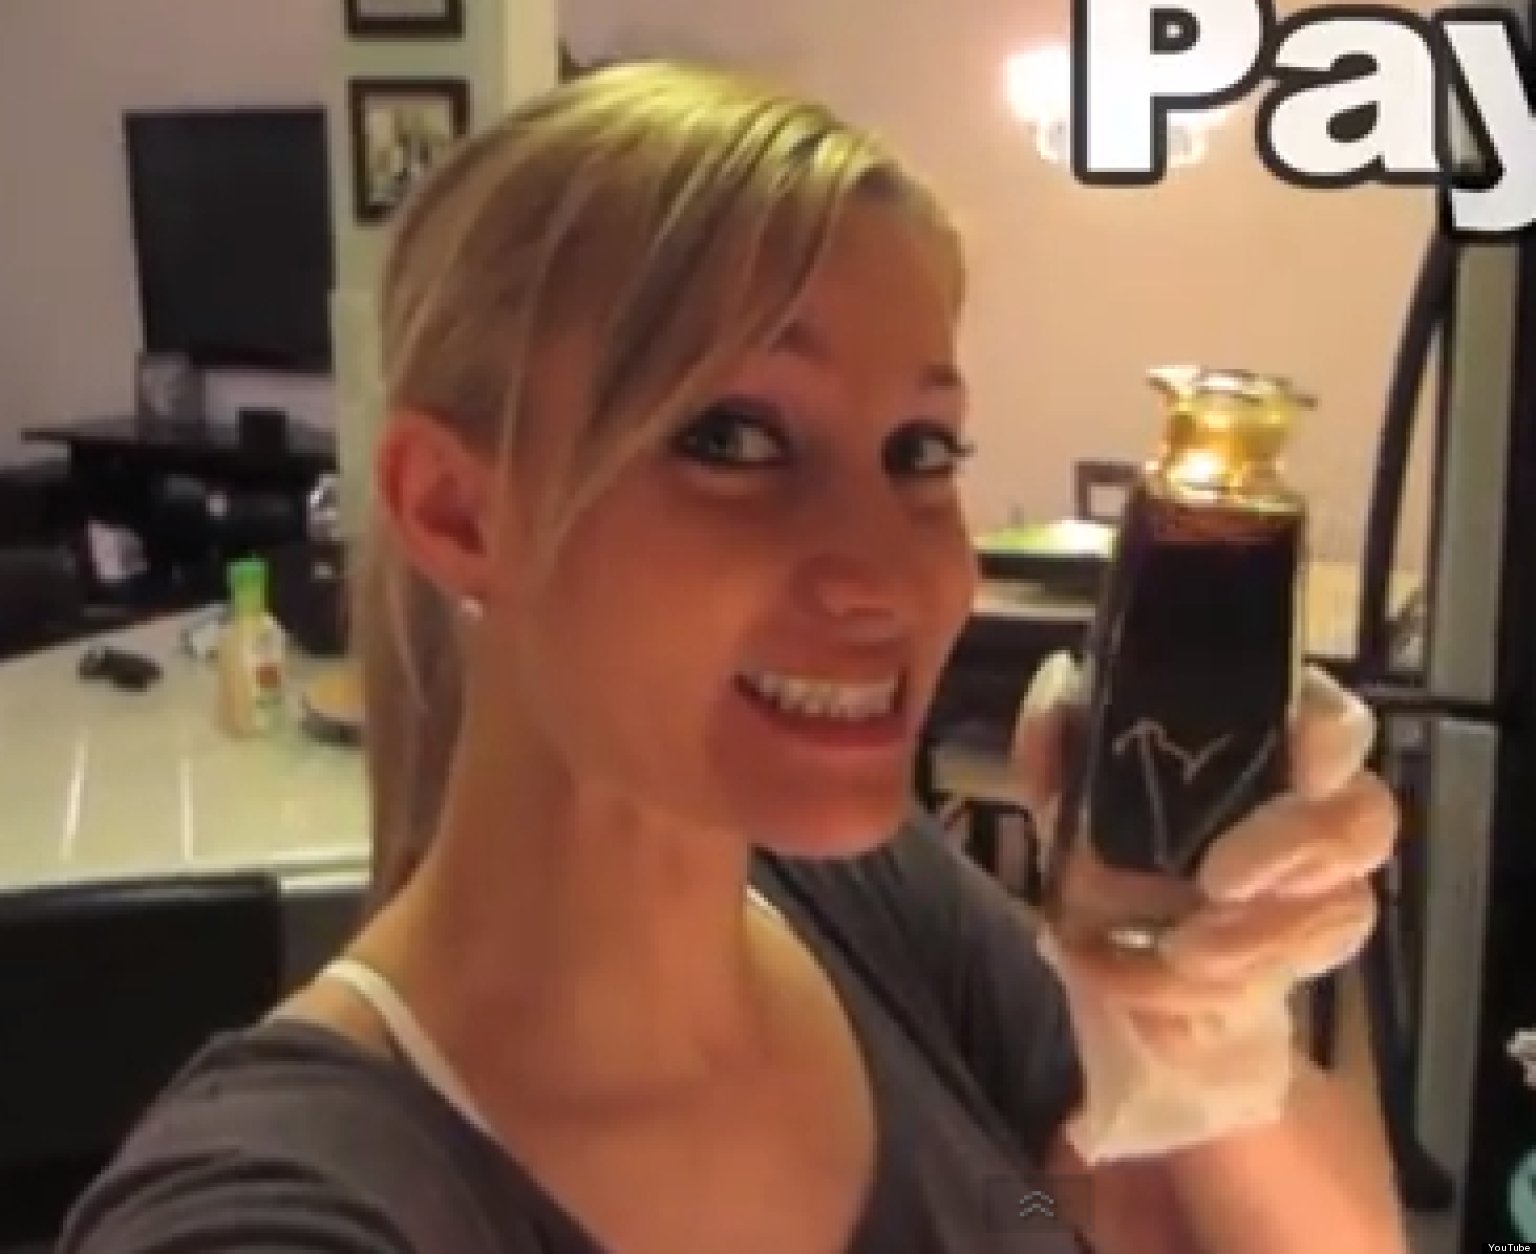 Girlfriend Gets Revenge With Hot Sauce Burrito Prank (VIDEO) HuffPost